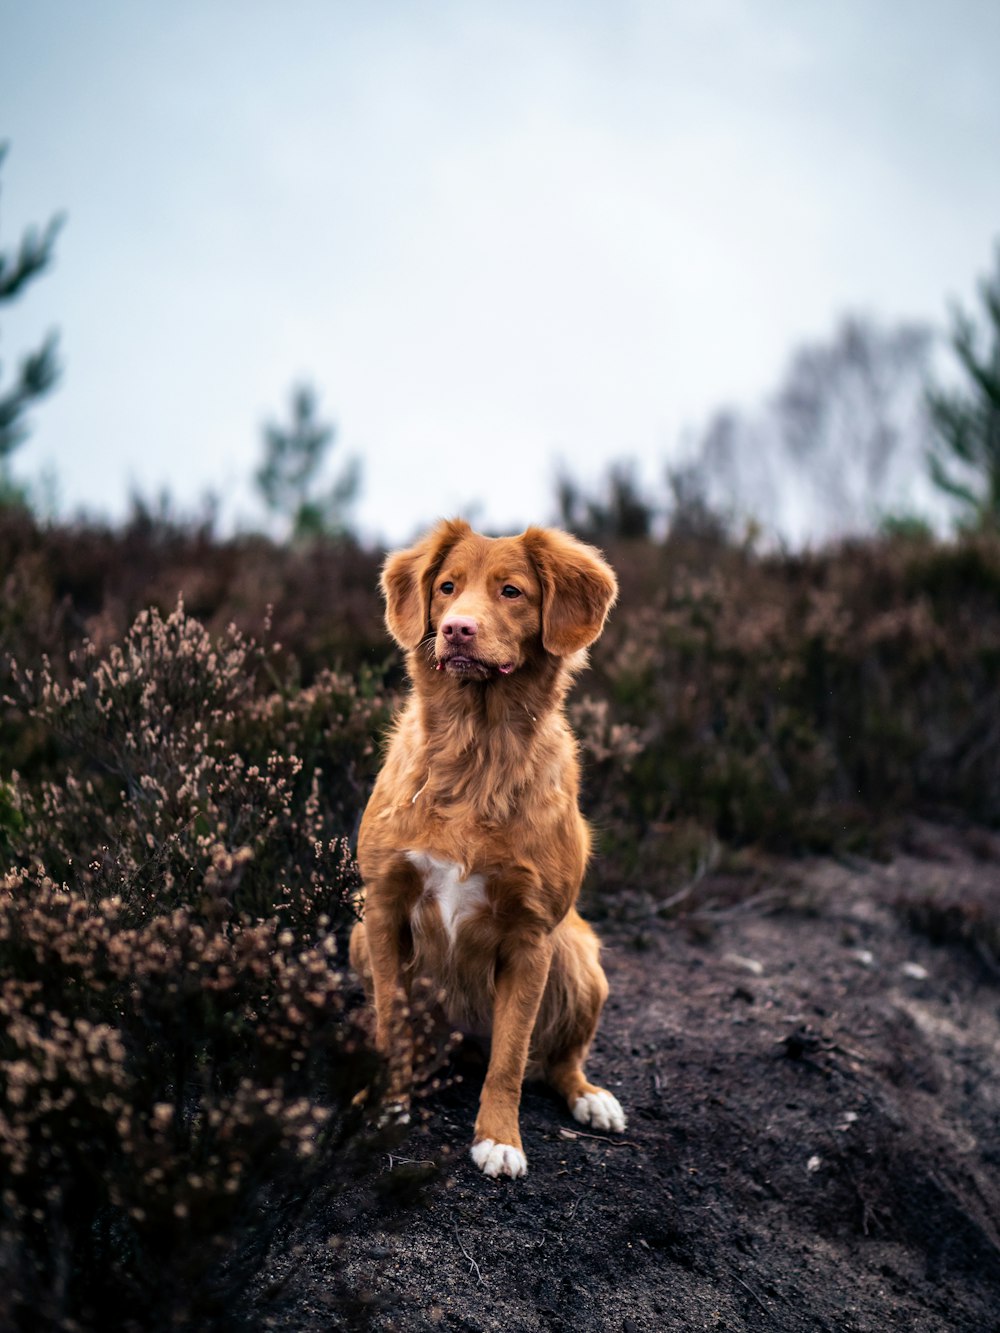 medium-coated brown dog near bush during daytime